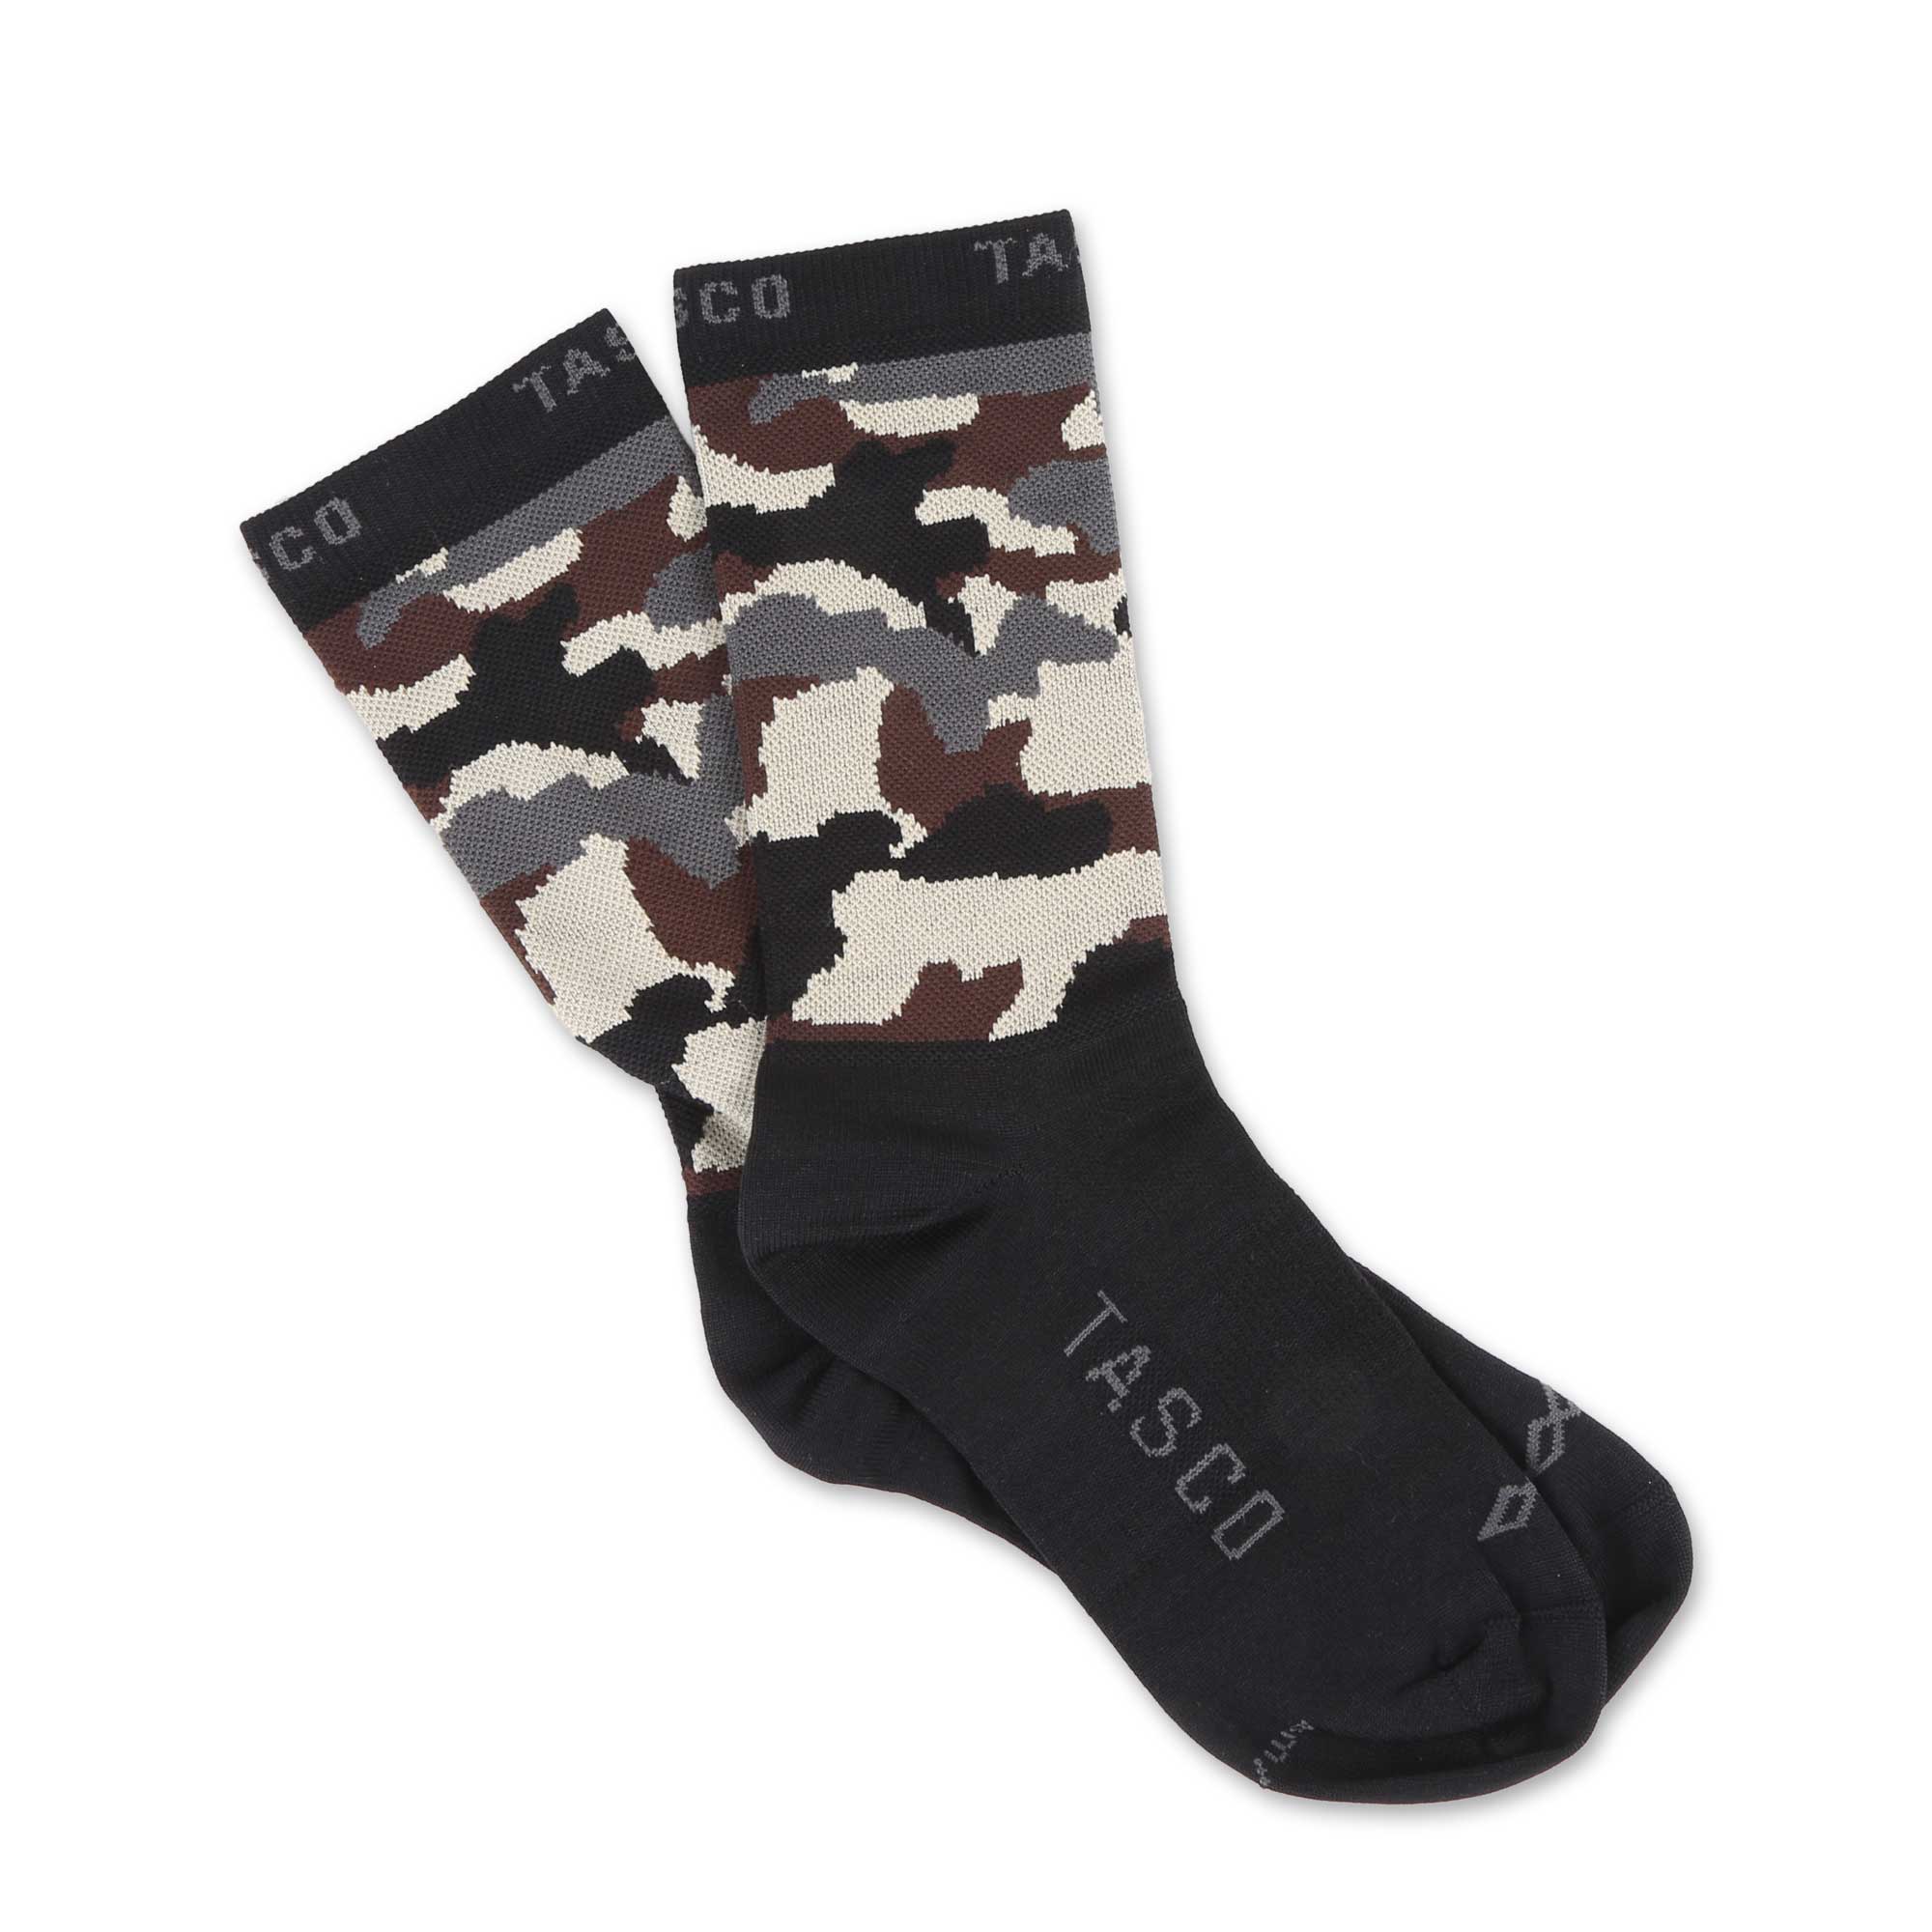 TASCO MTB Surplus Socks Desert Camo - Grey, brown, black pair